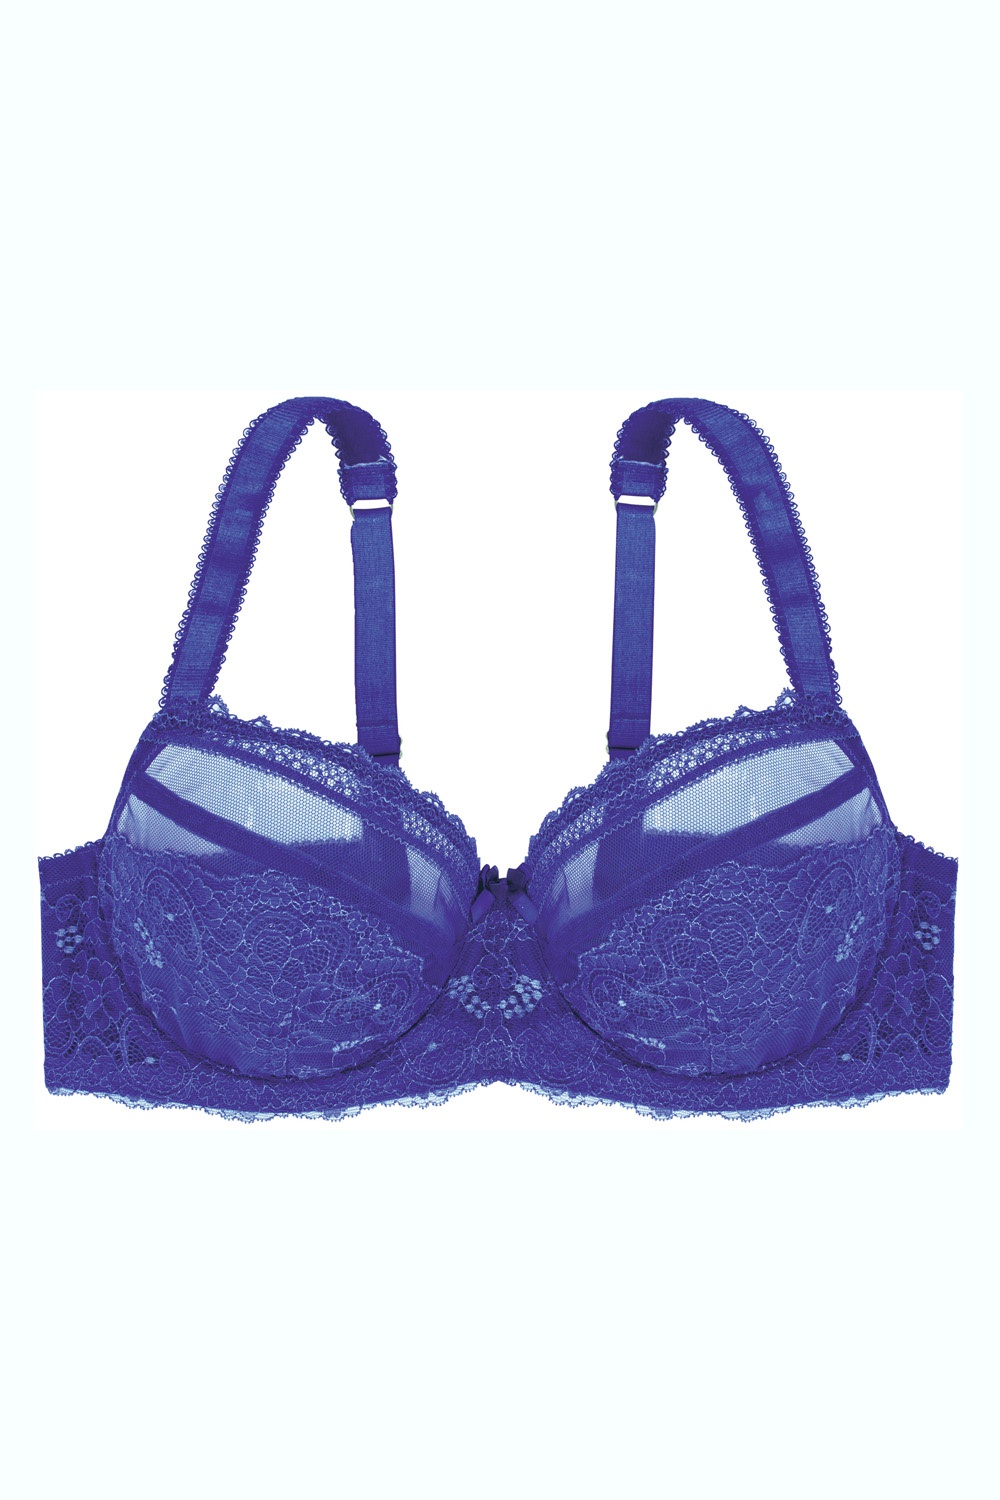 Dorina Plus Size Maureen non-padded lace mesh bra in blue